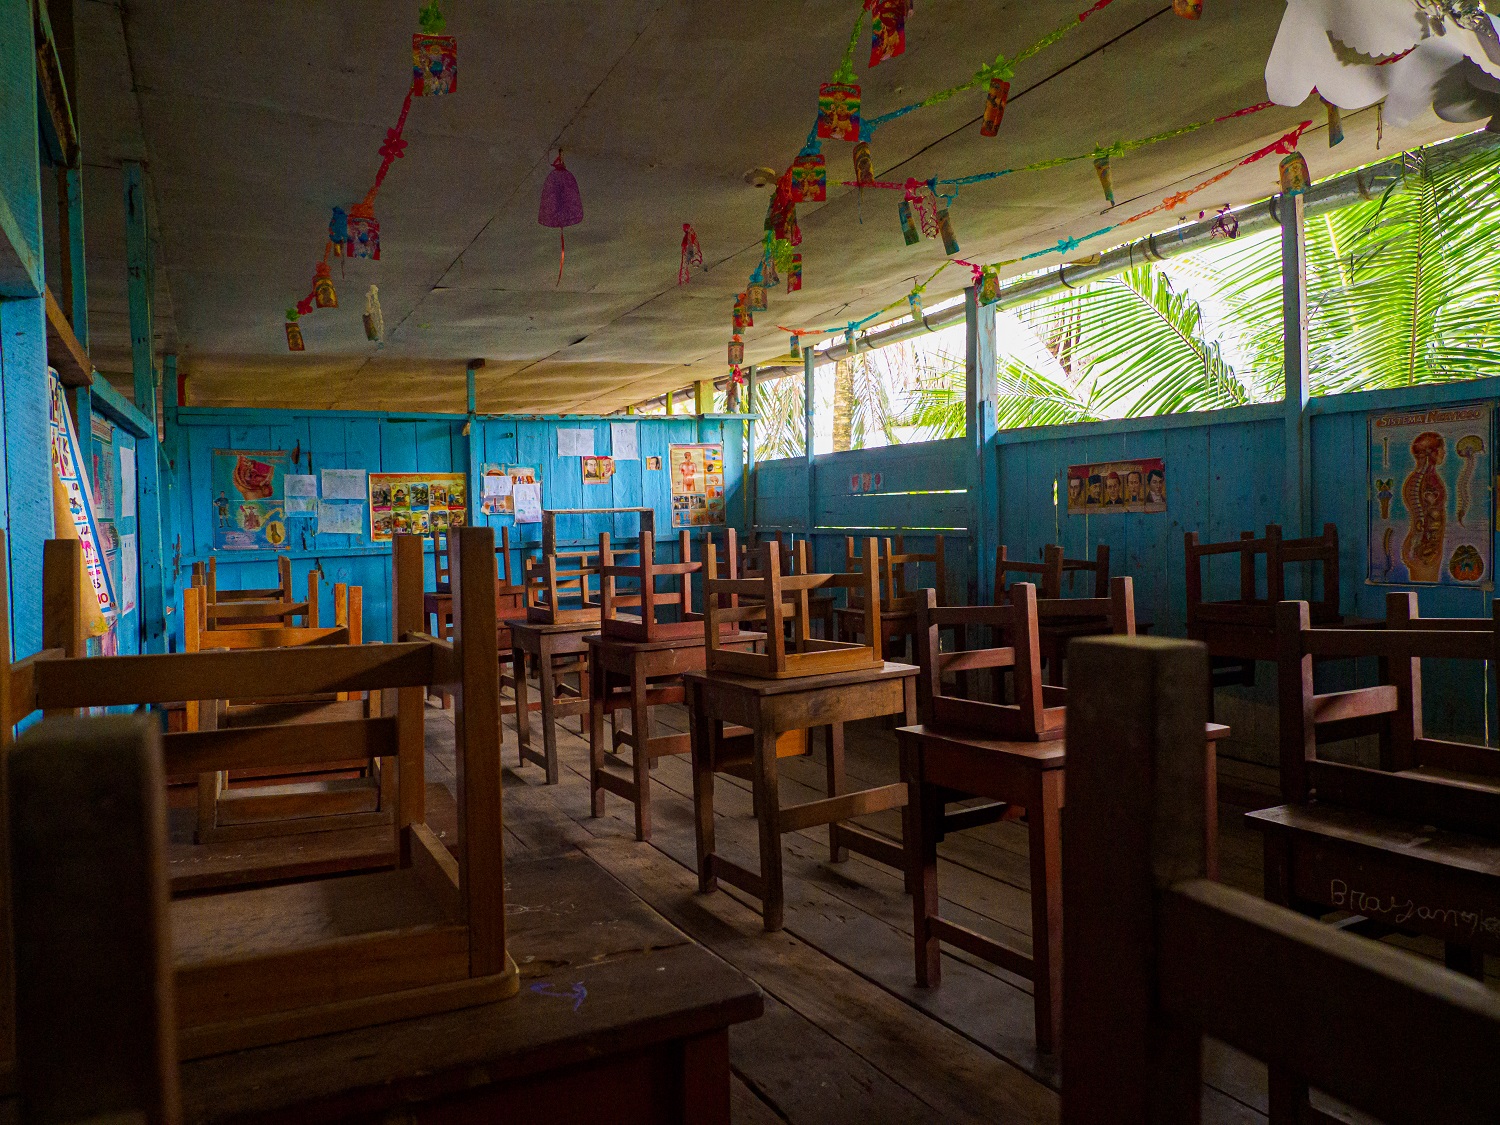 Image of Amazonian classroom